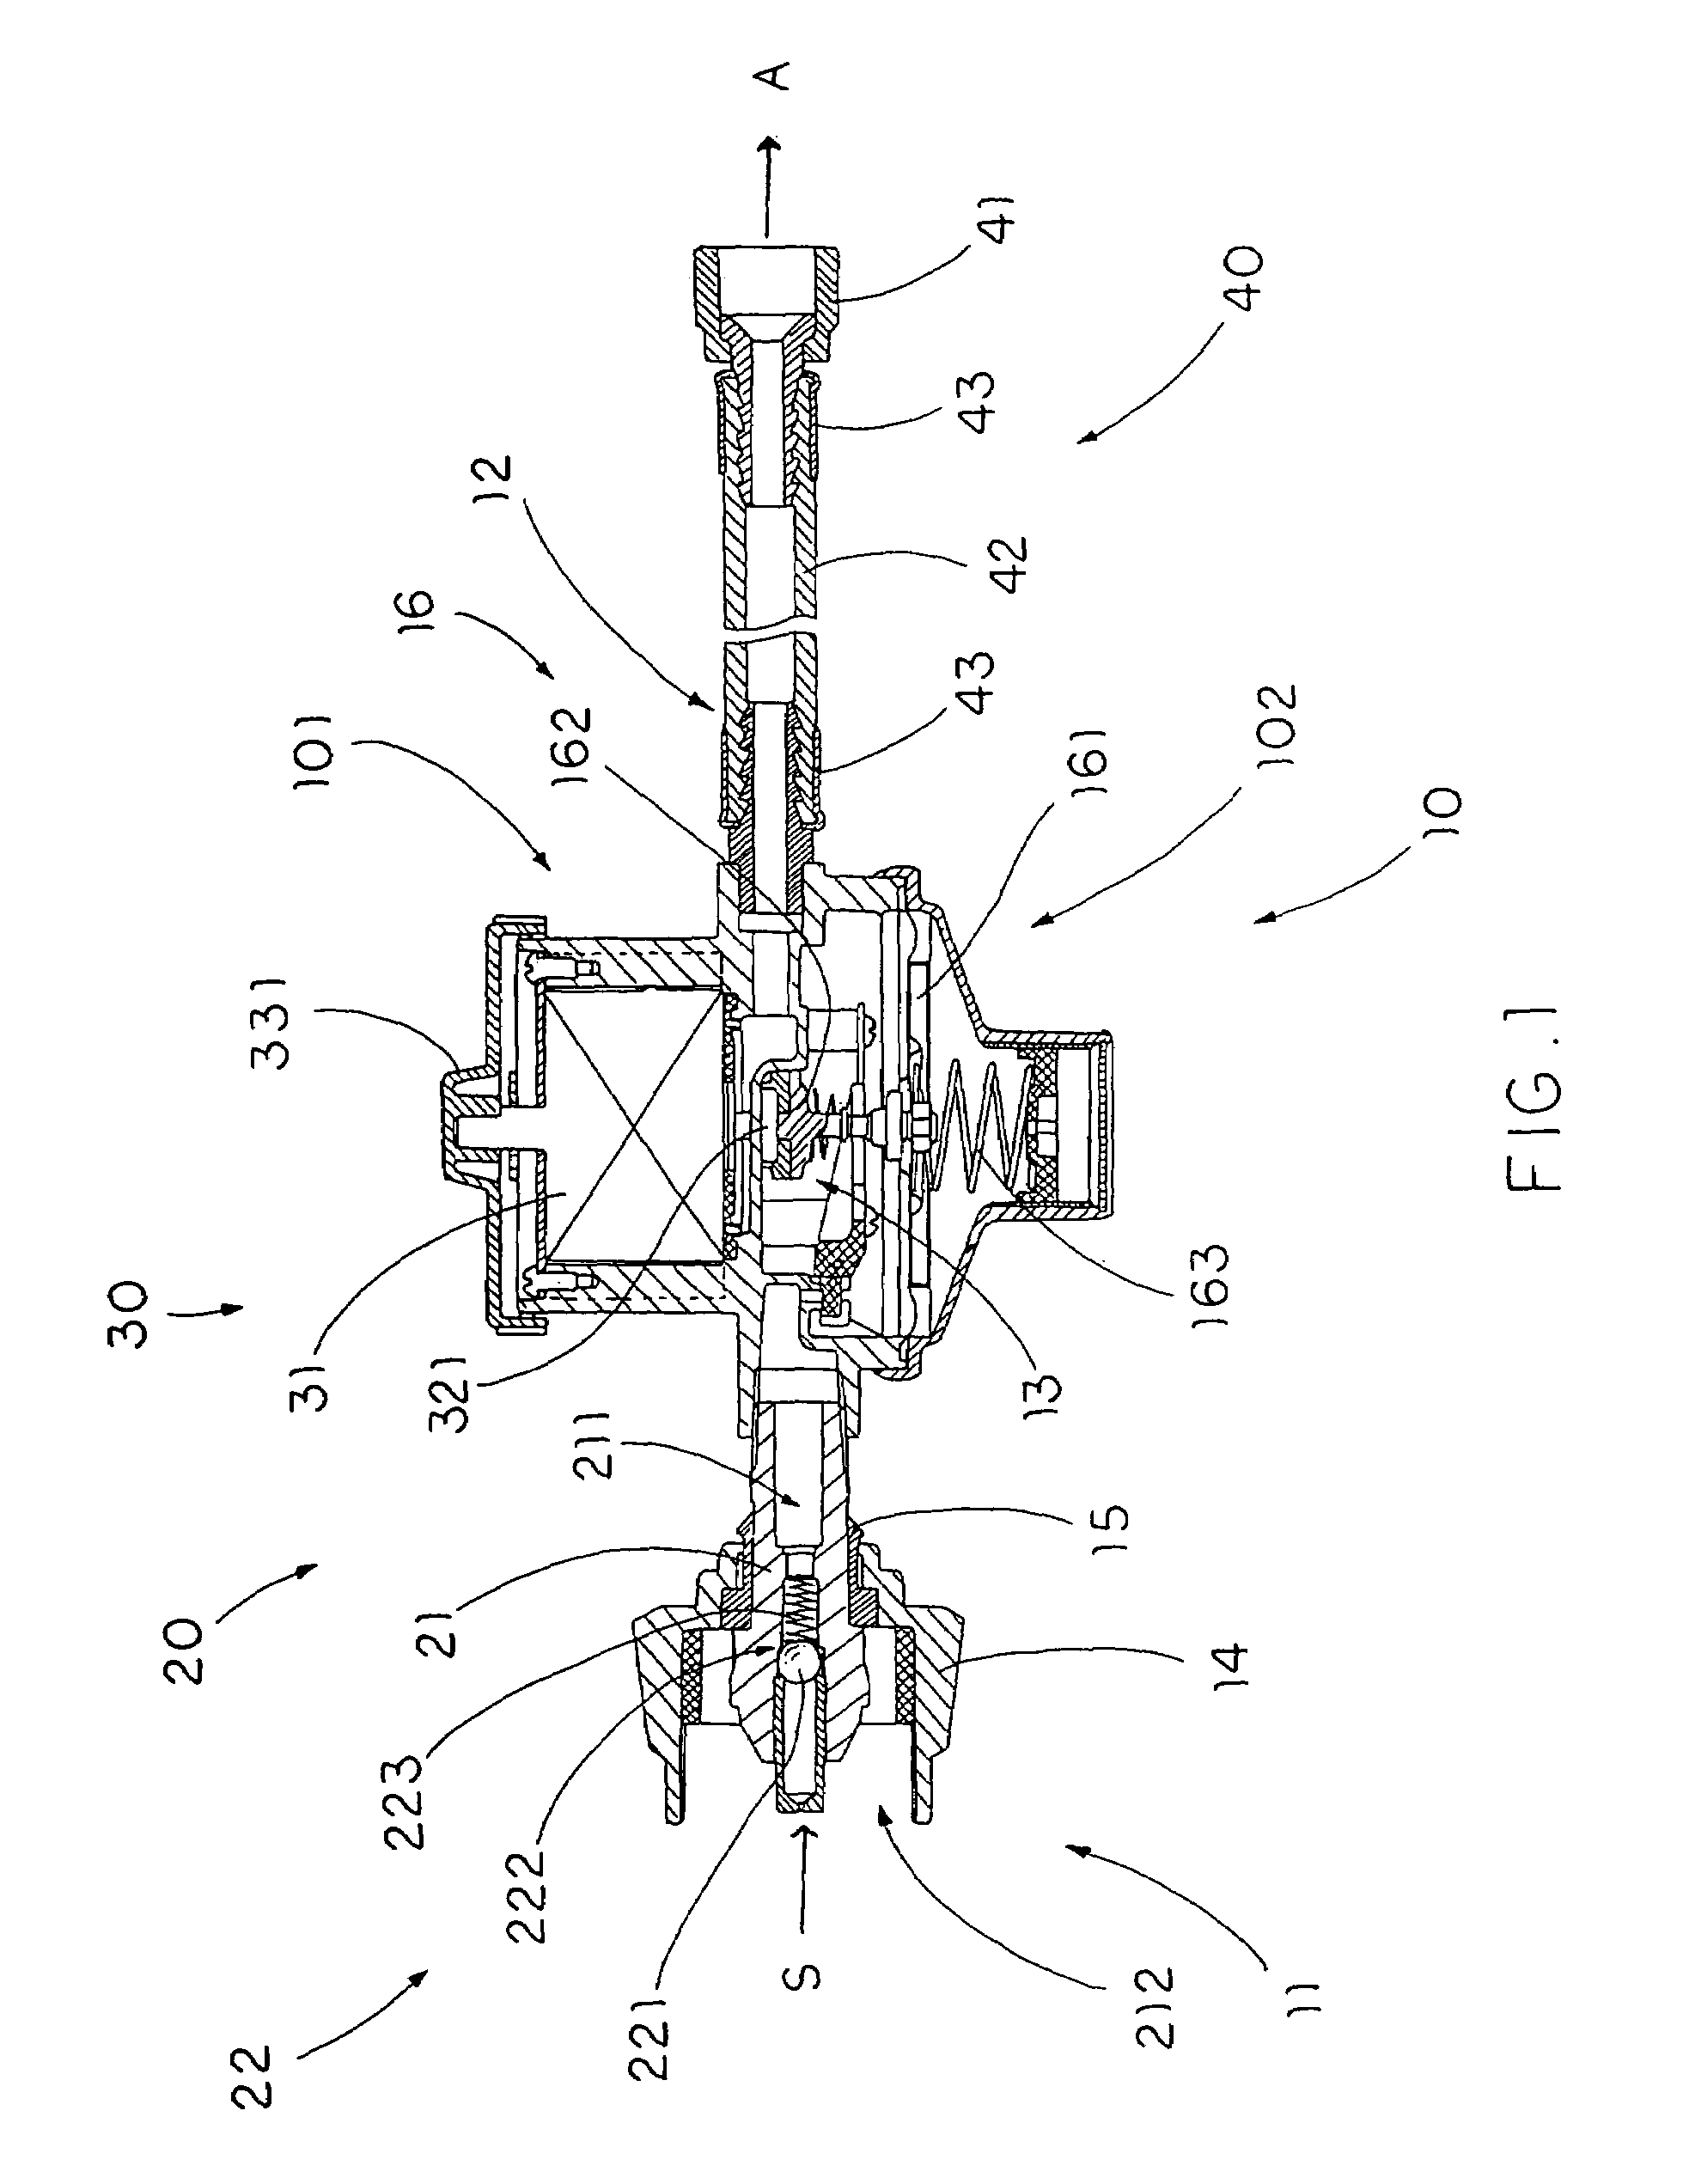 Timing regulator for outdoor gas apparatus